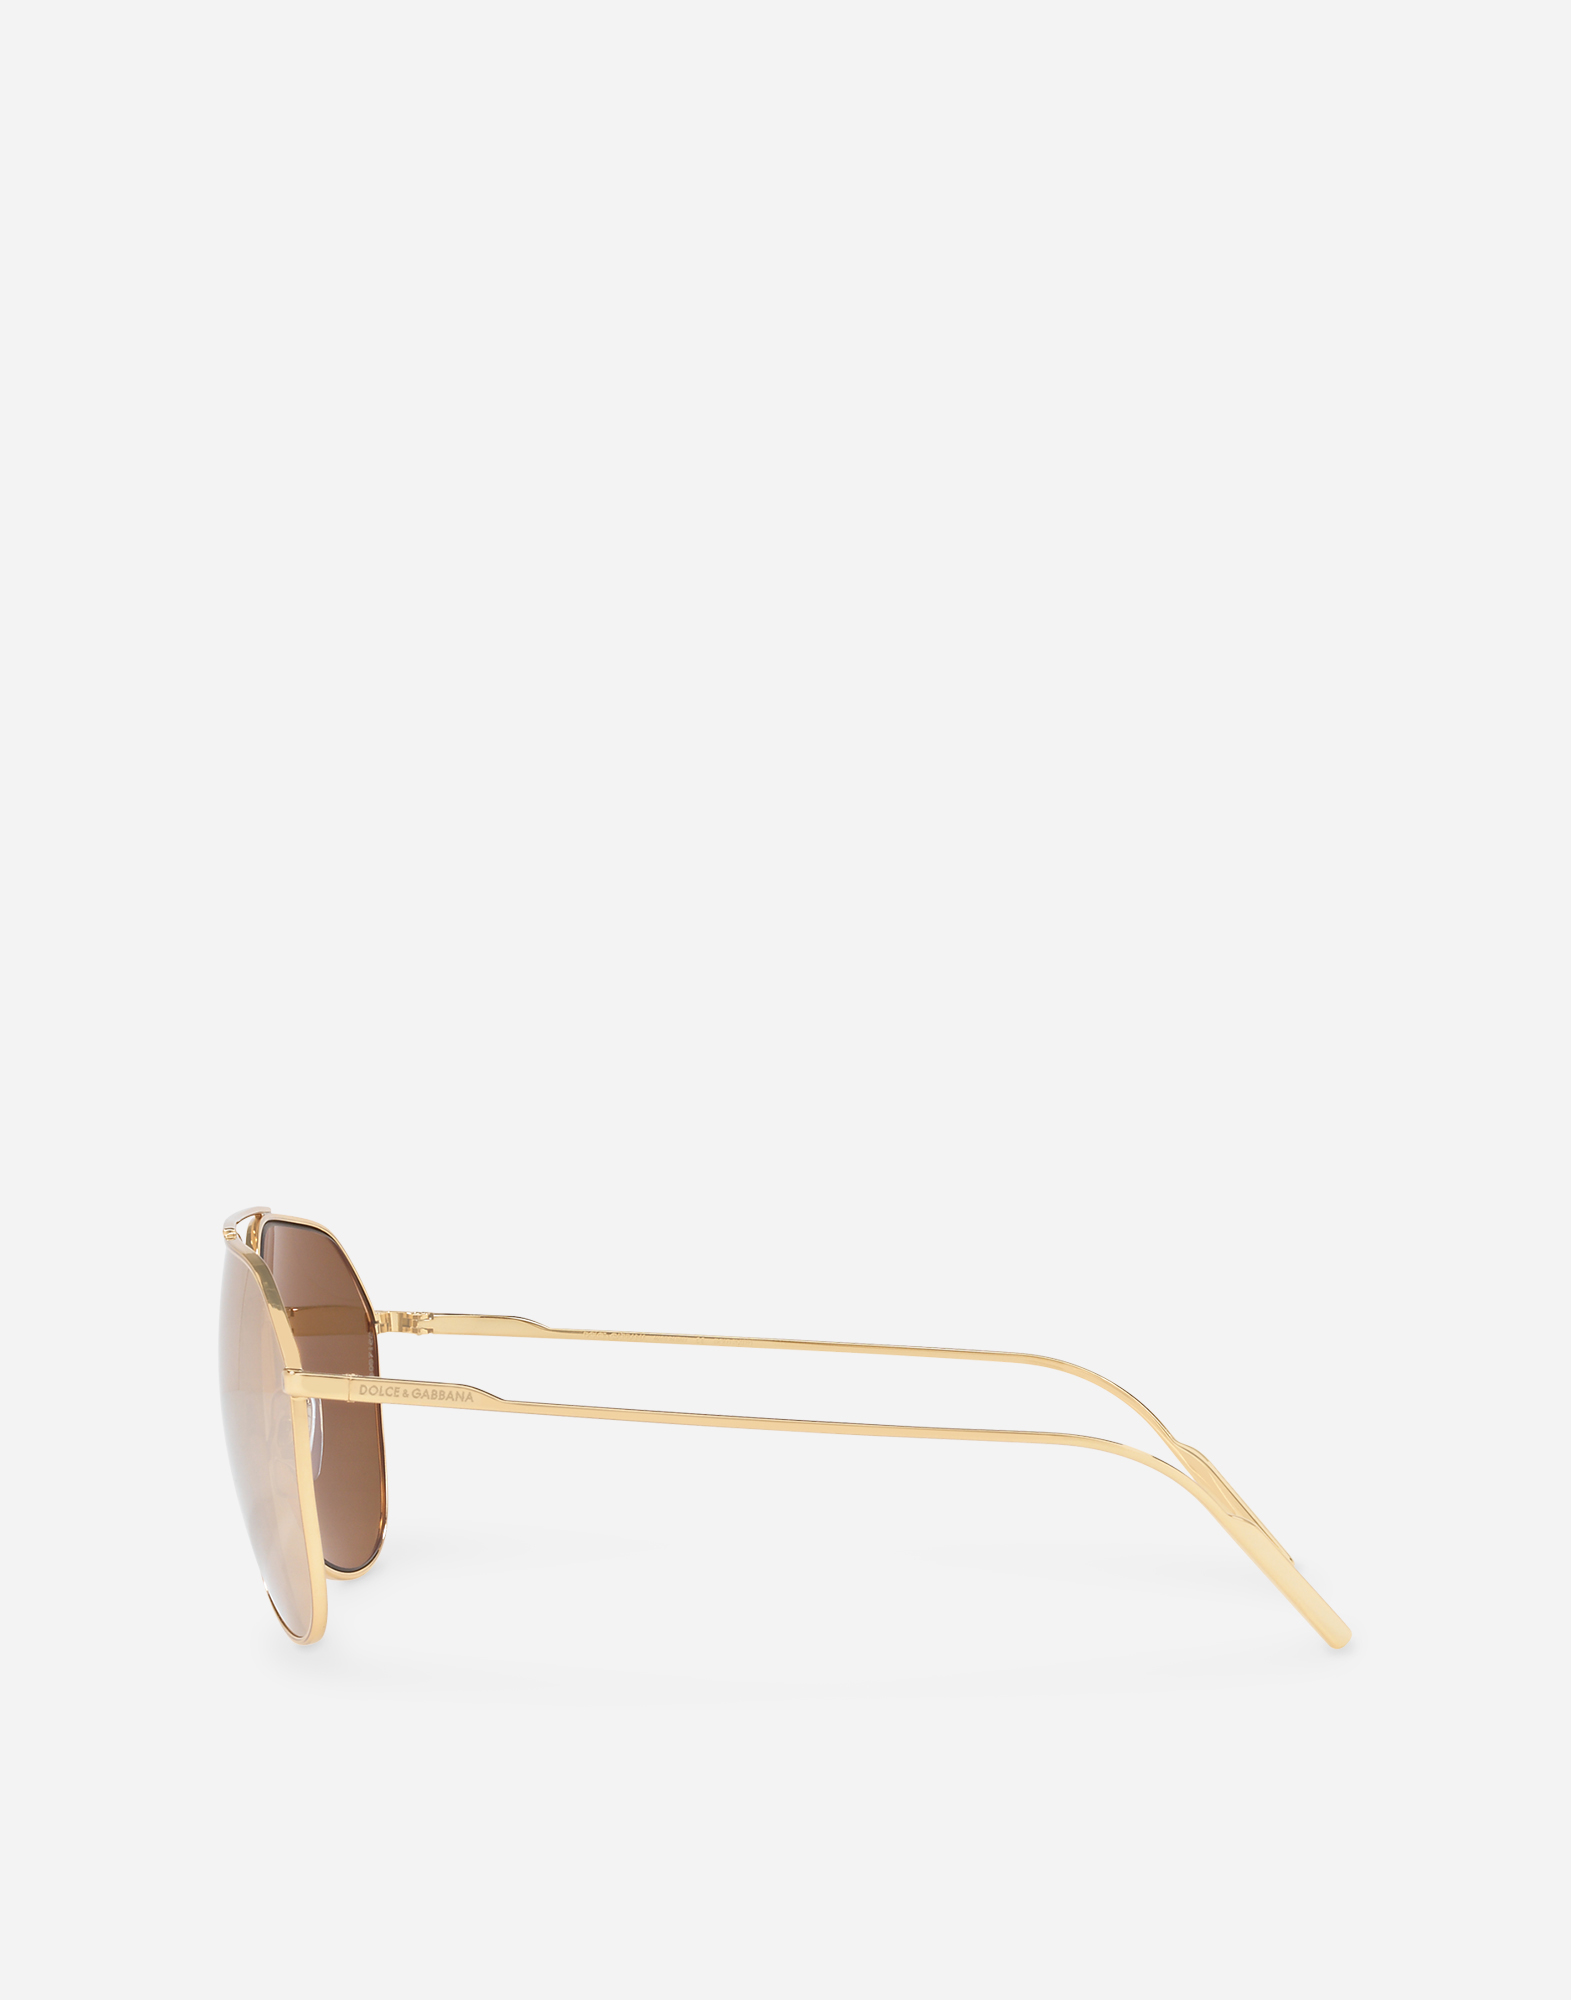 dolce and gabbana 18k gold sunglasses